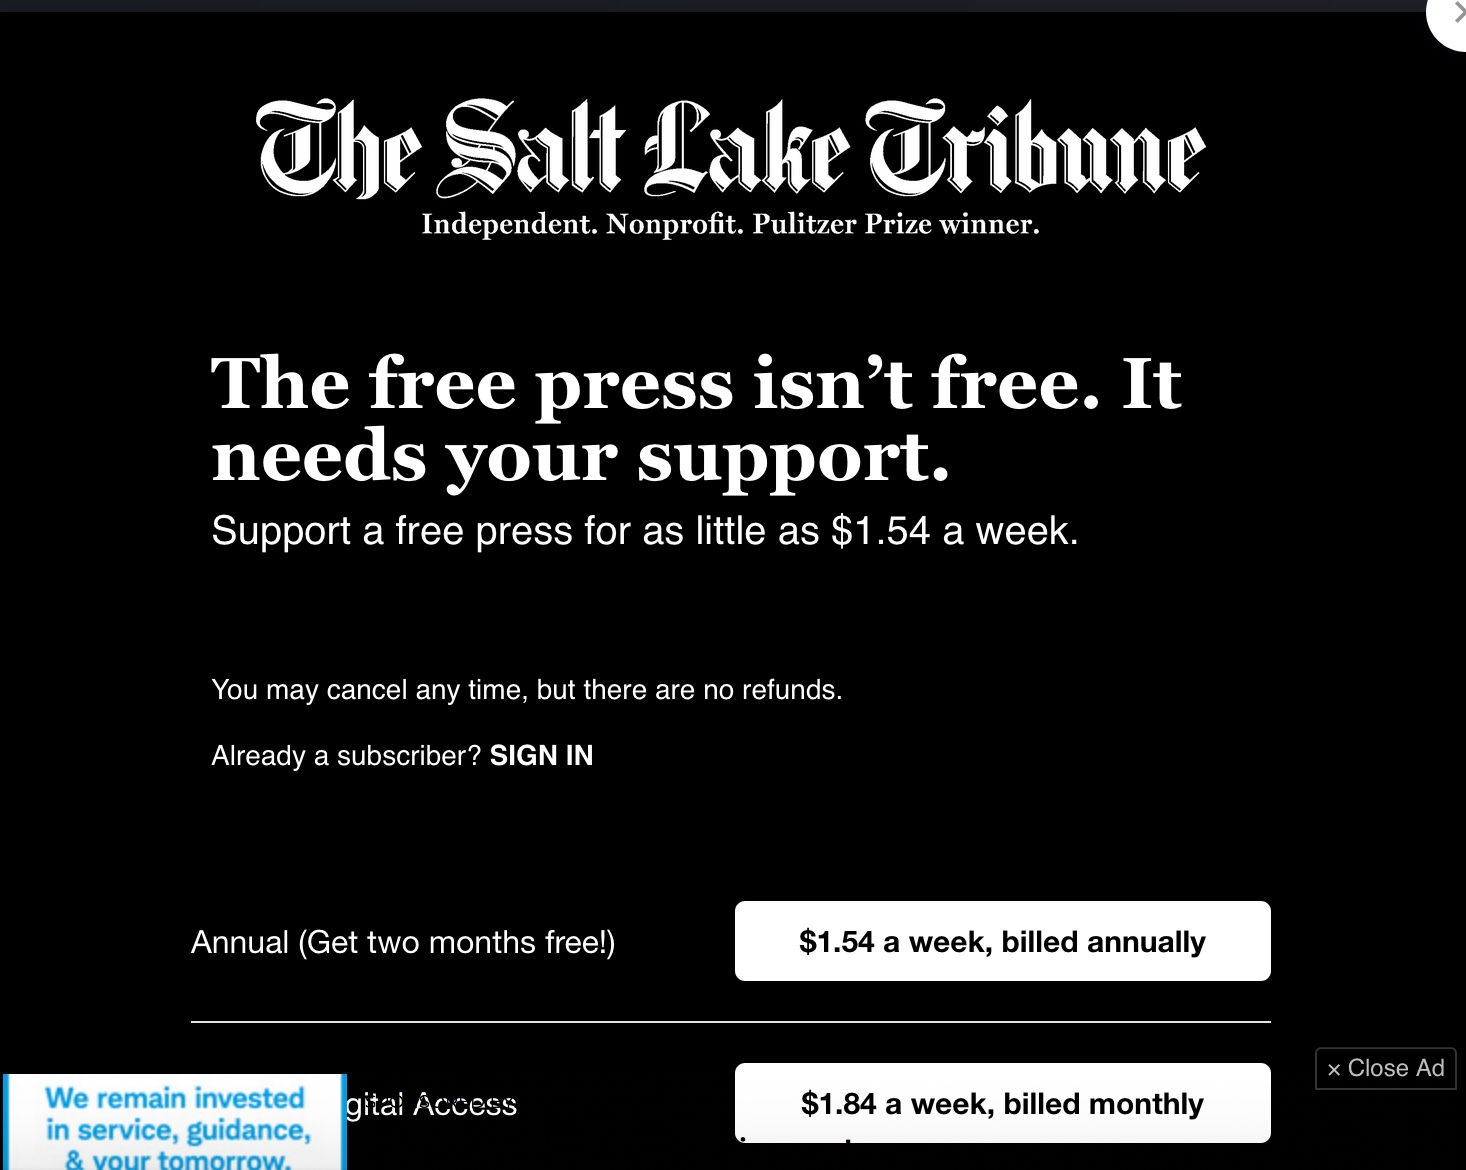 SLTrib_The free press isn't free.png